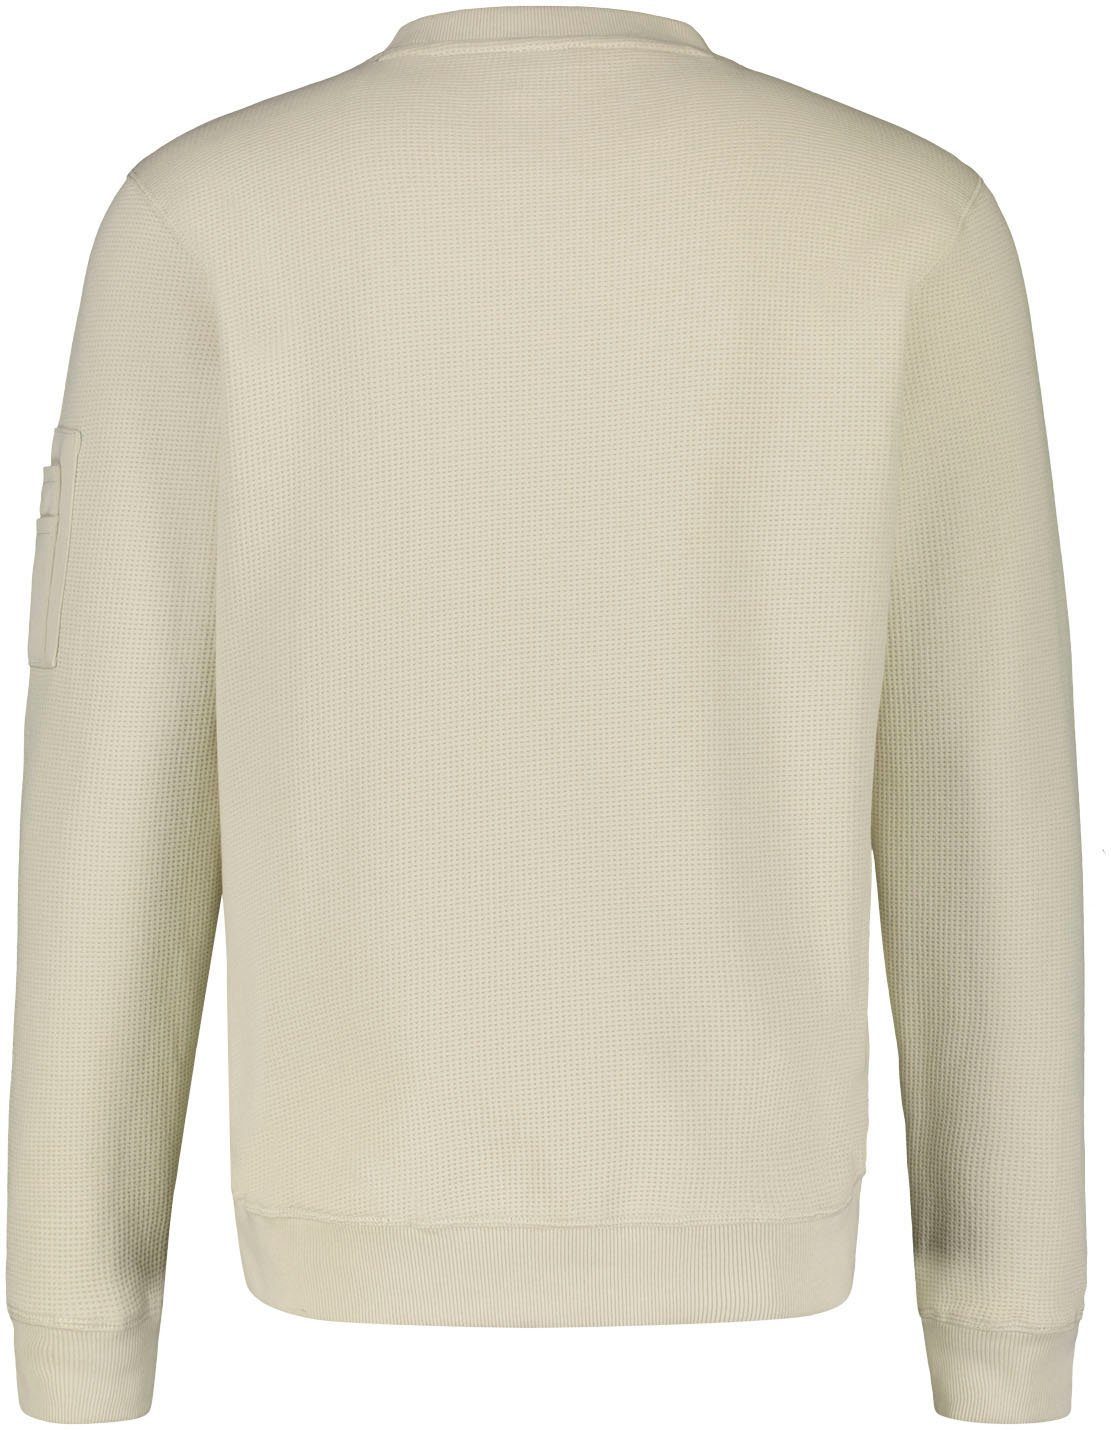 LERROS Sweatshirt beige pale